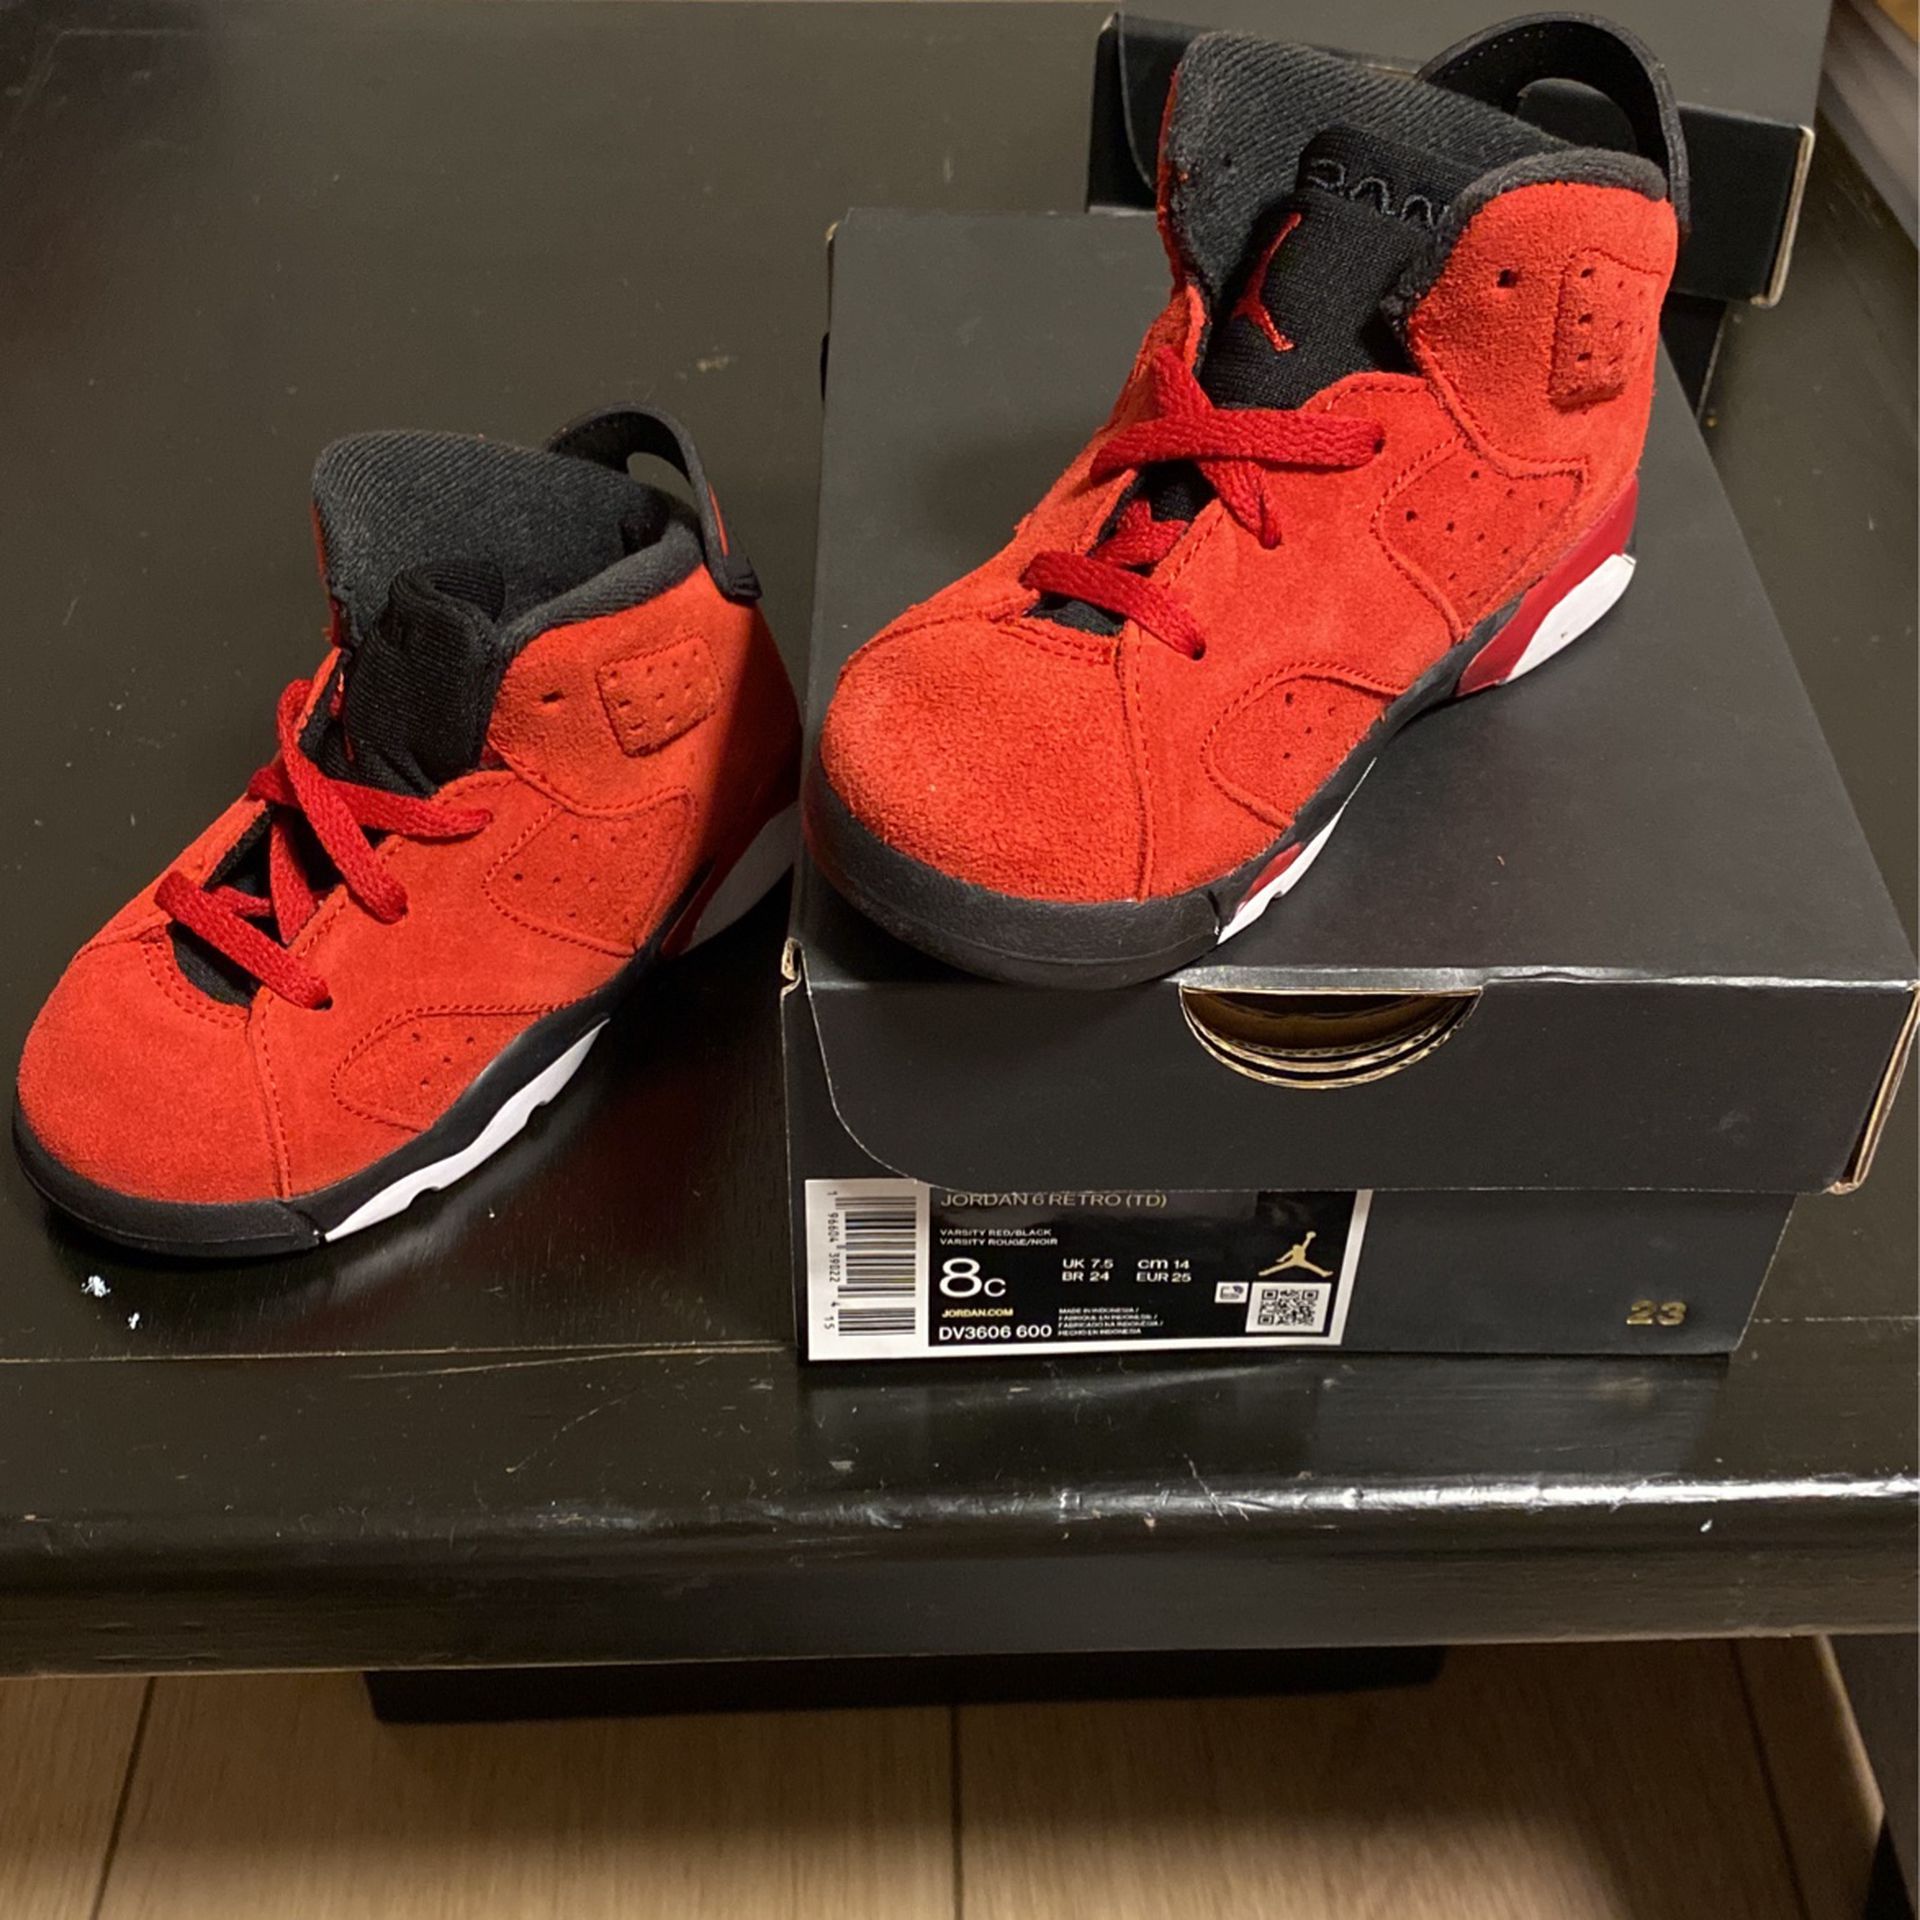 Brand New! Jordan 6 Retro (td) Size 8c